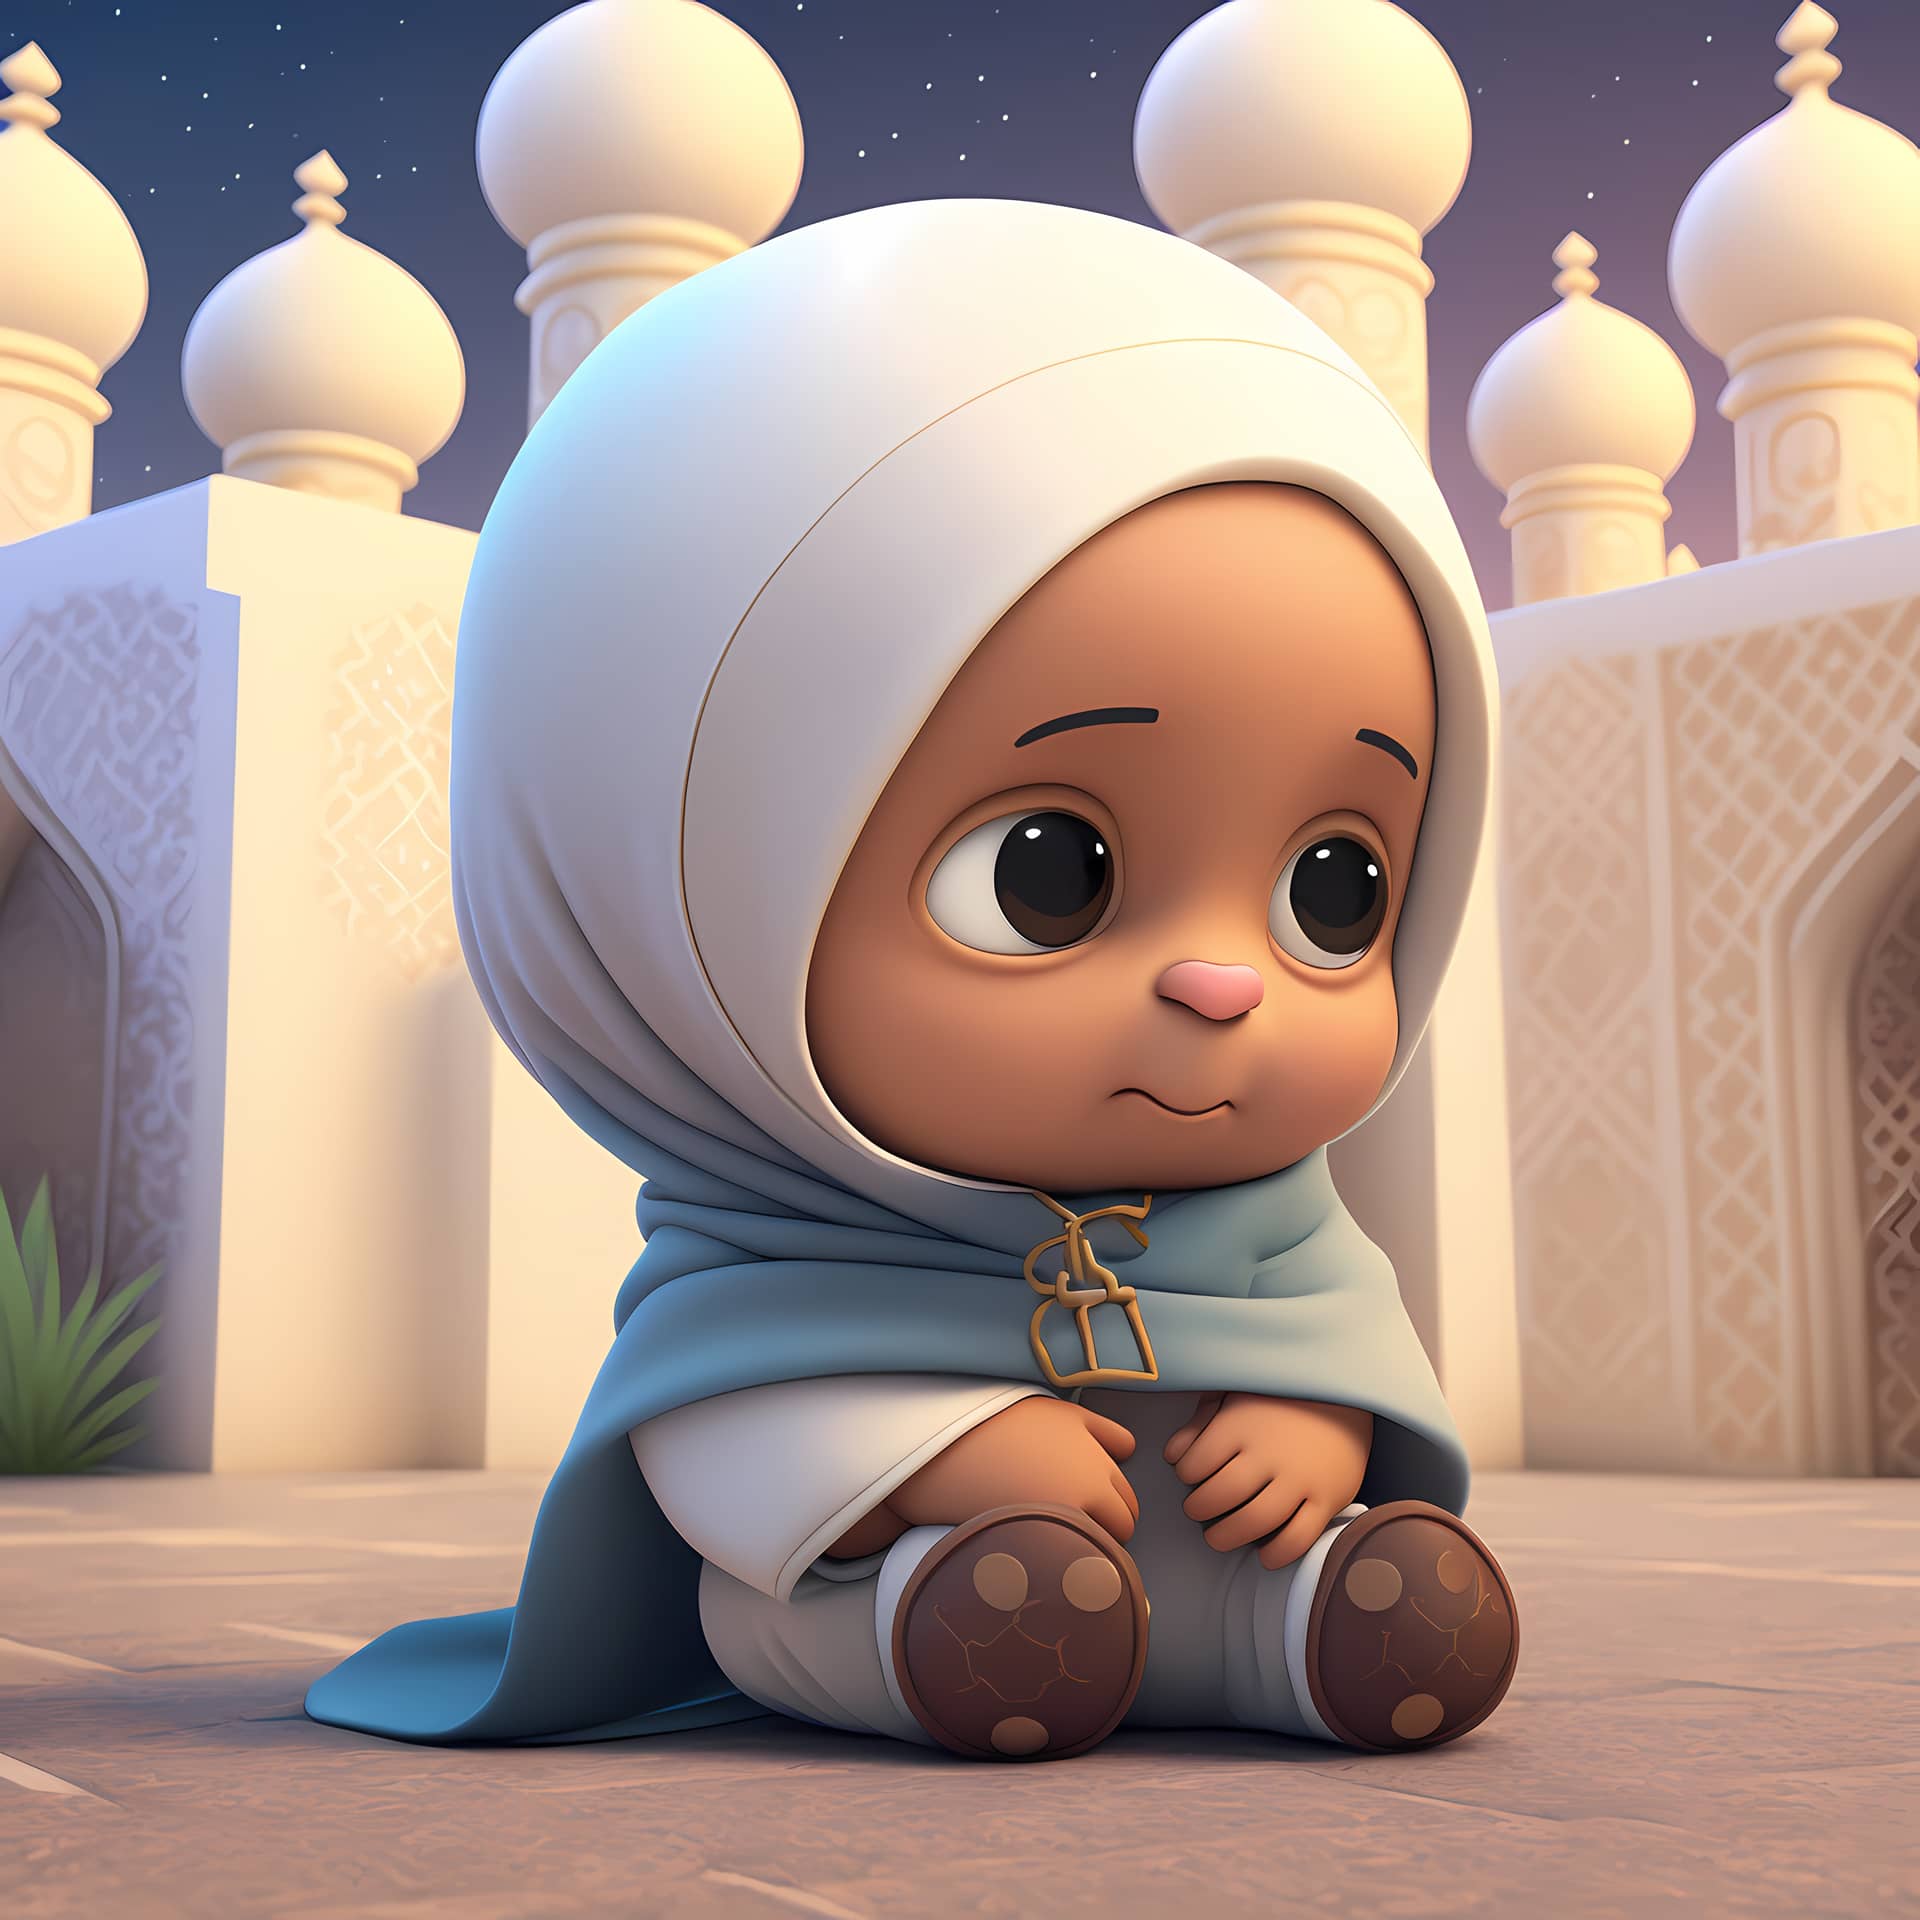 Adorable cute muslim children cartoon character 3d rendering evocative image